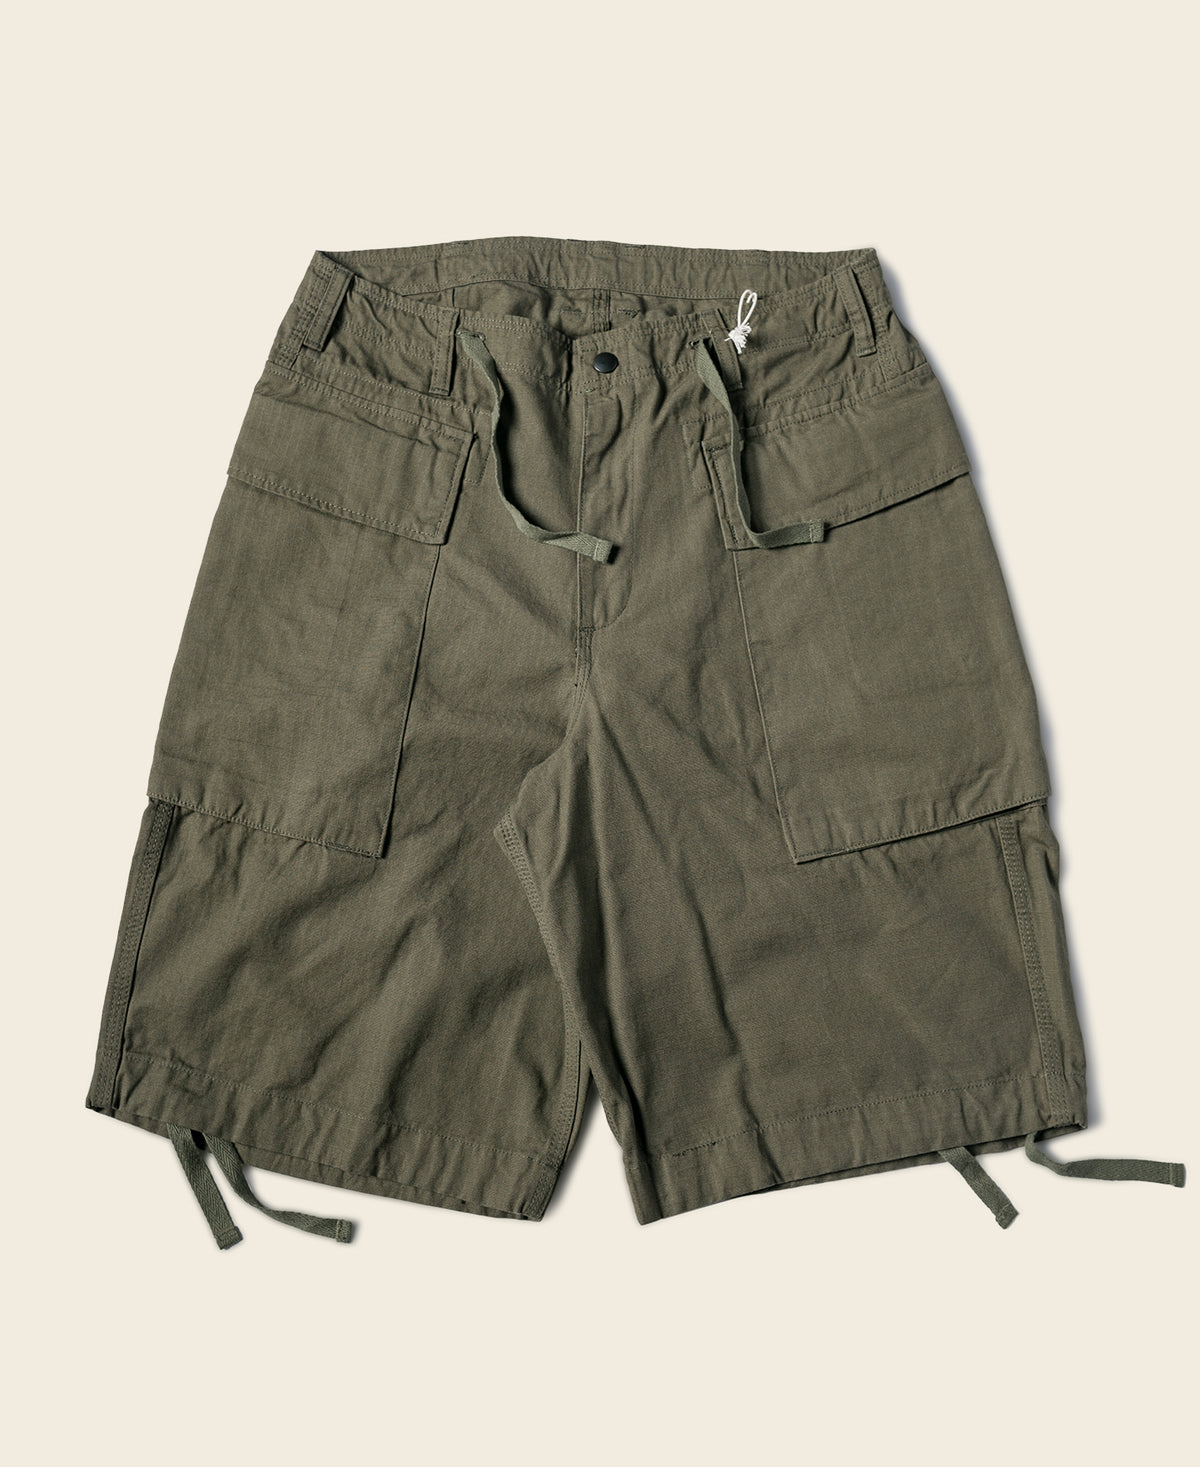 8.5 oz Cotton Ripstop Cargo Shorts - Olive